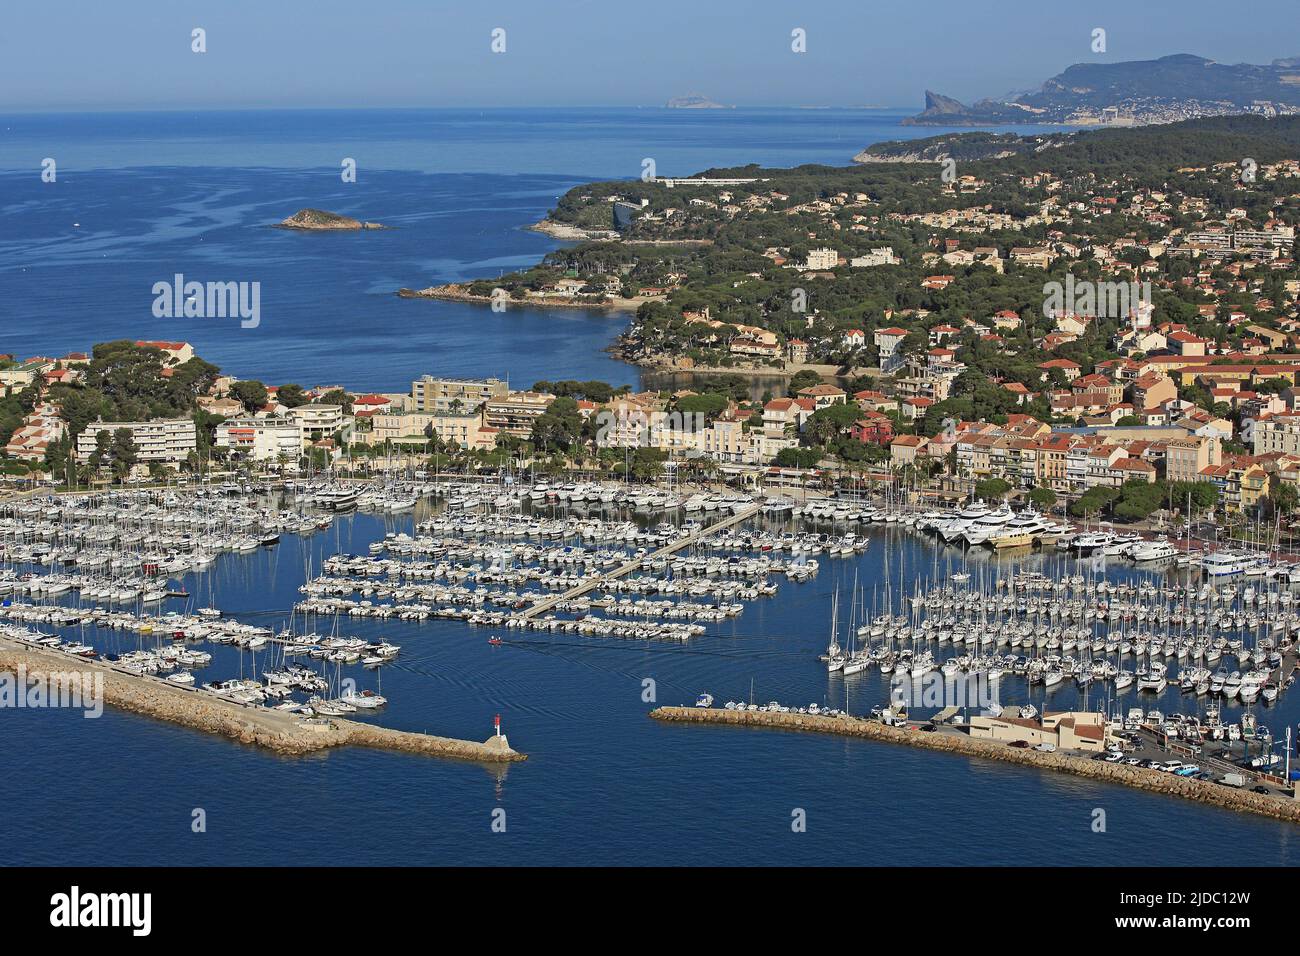 France, Var, Bandol, a port city on the Mediterranean (aerial photo) Stock Photo